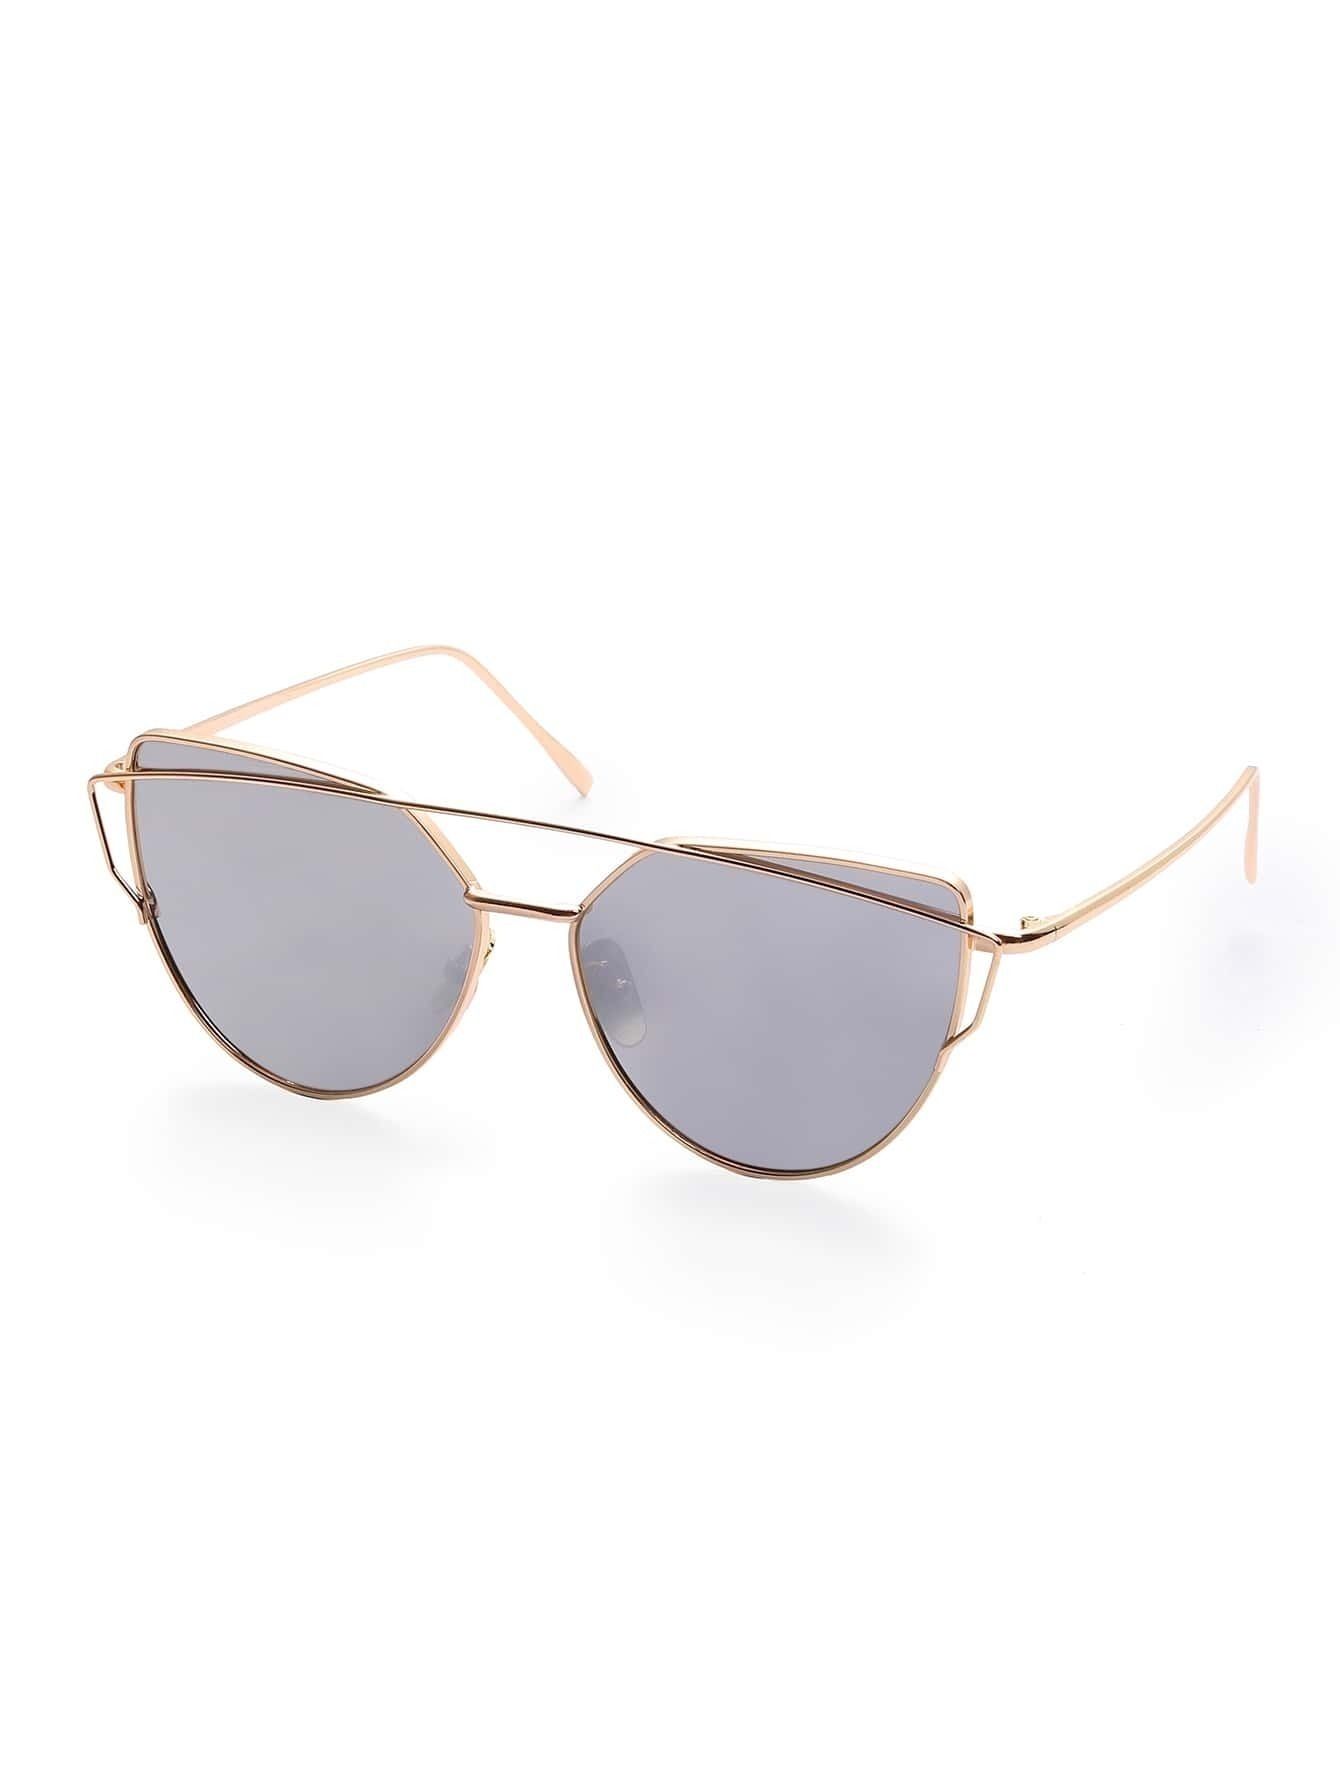 Gold Metal Frame Double Bridge Grey Lens Sunglasses | Romwe